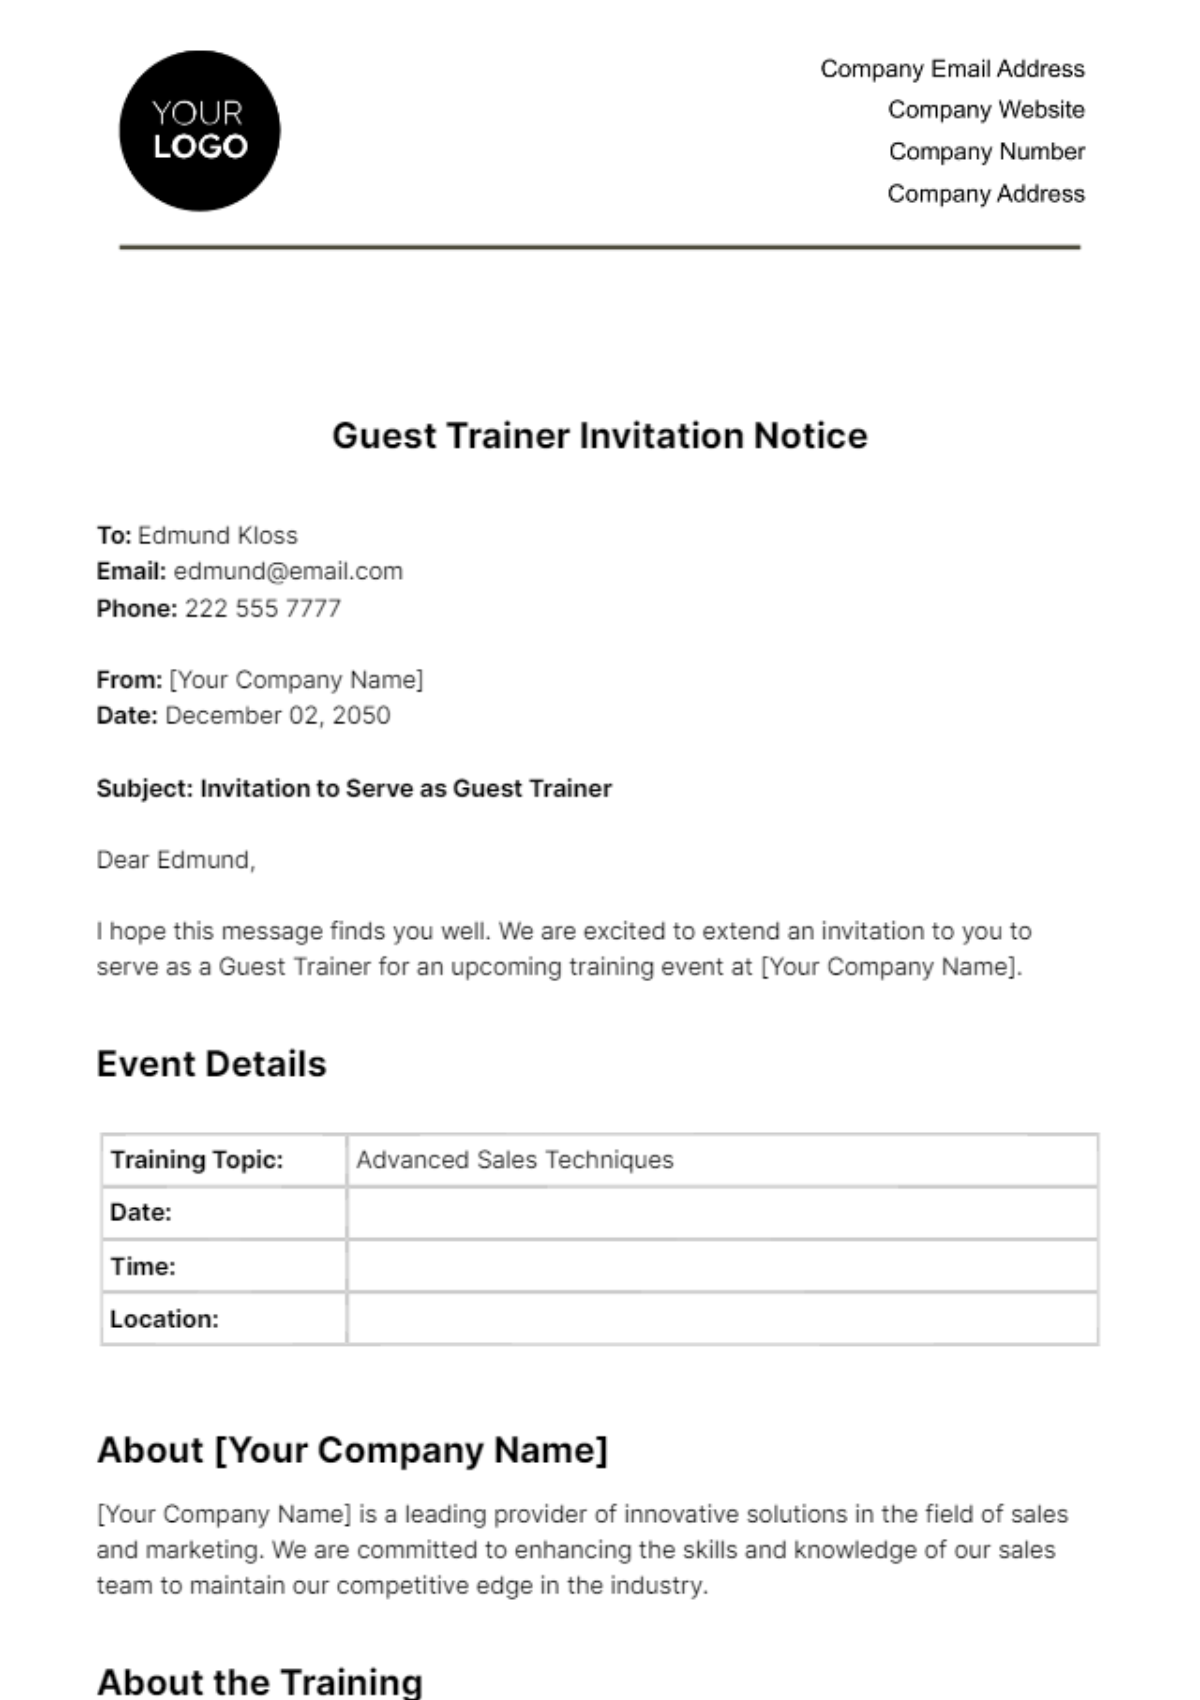 Guest Trainer Invitation Notice HR Template